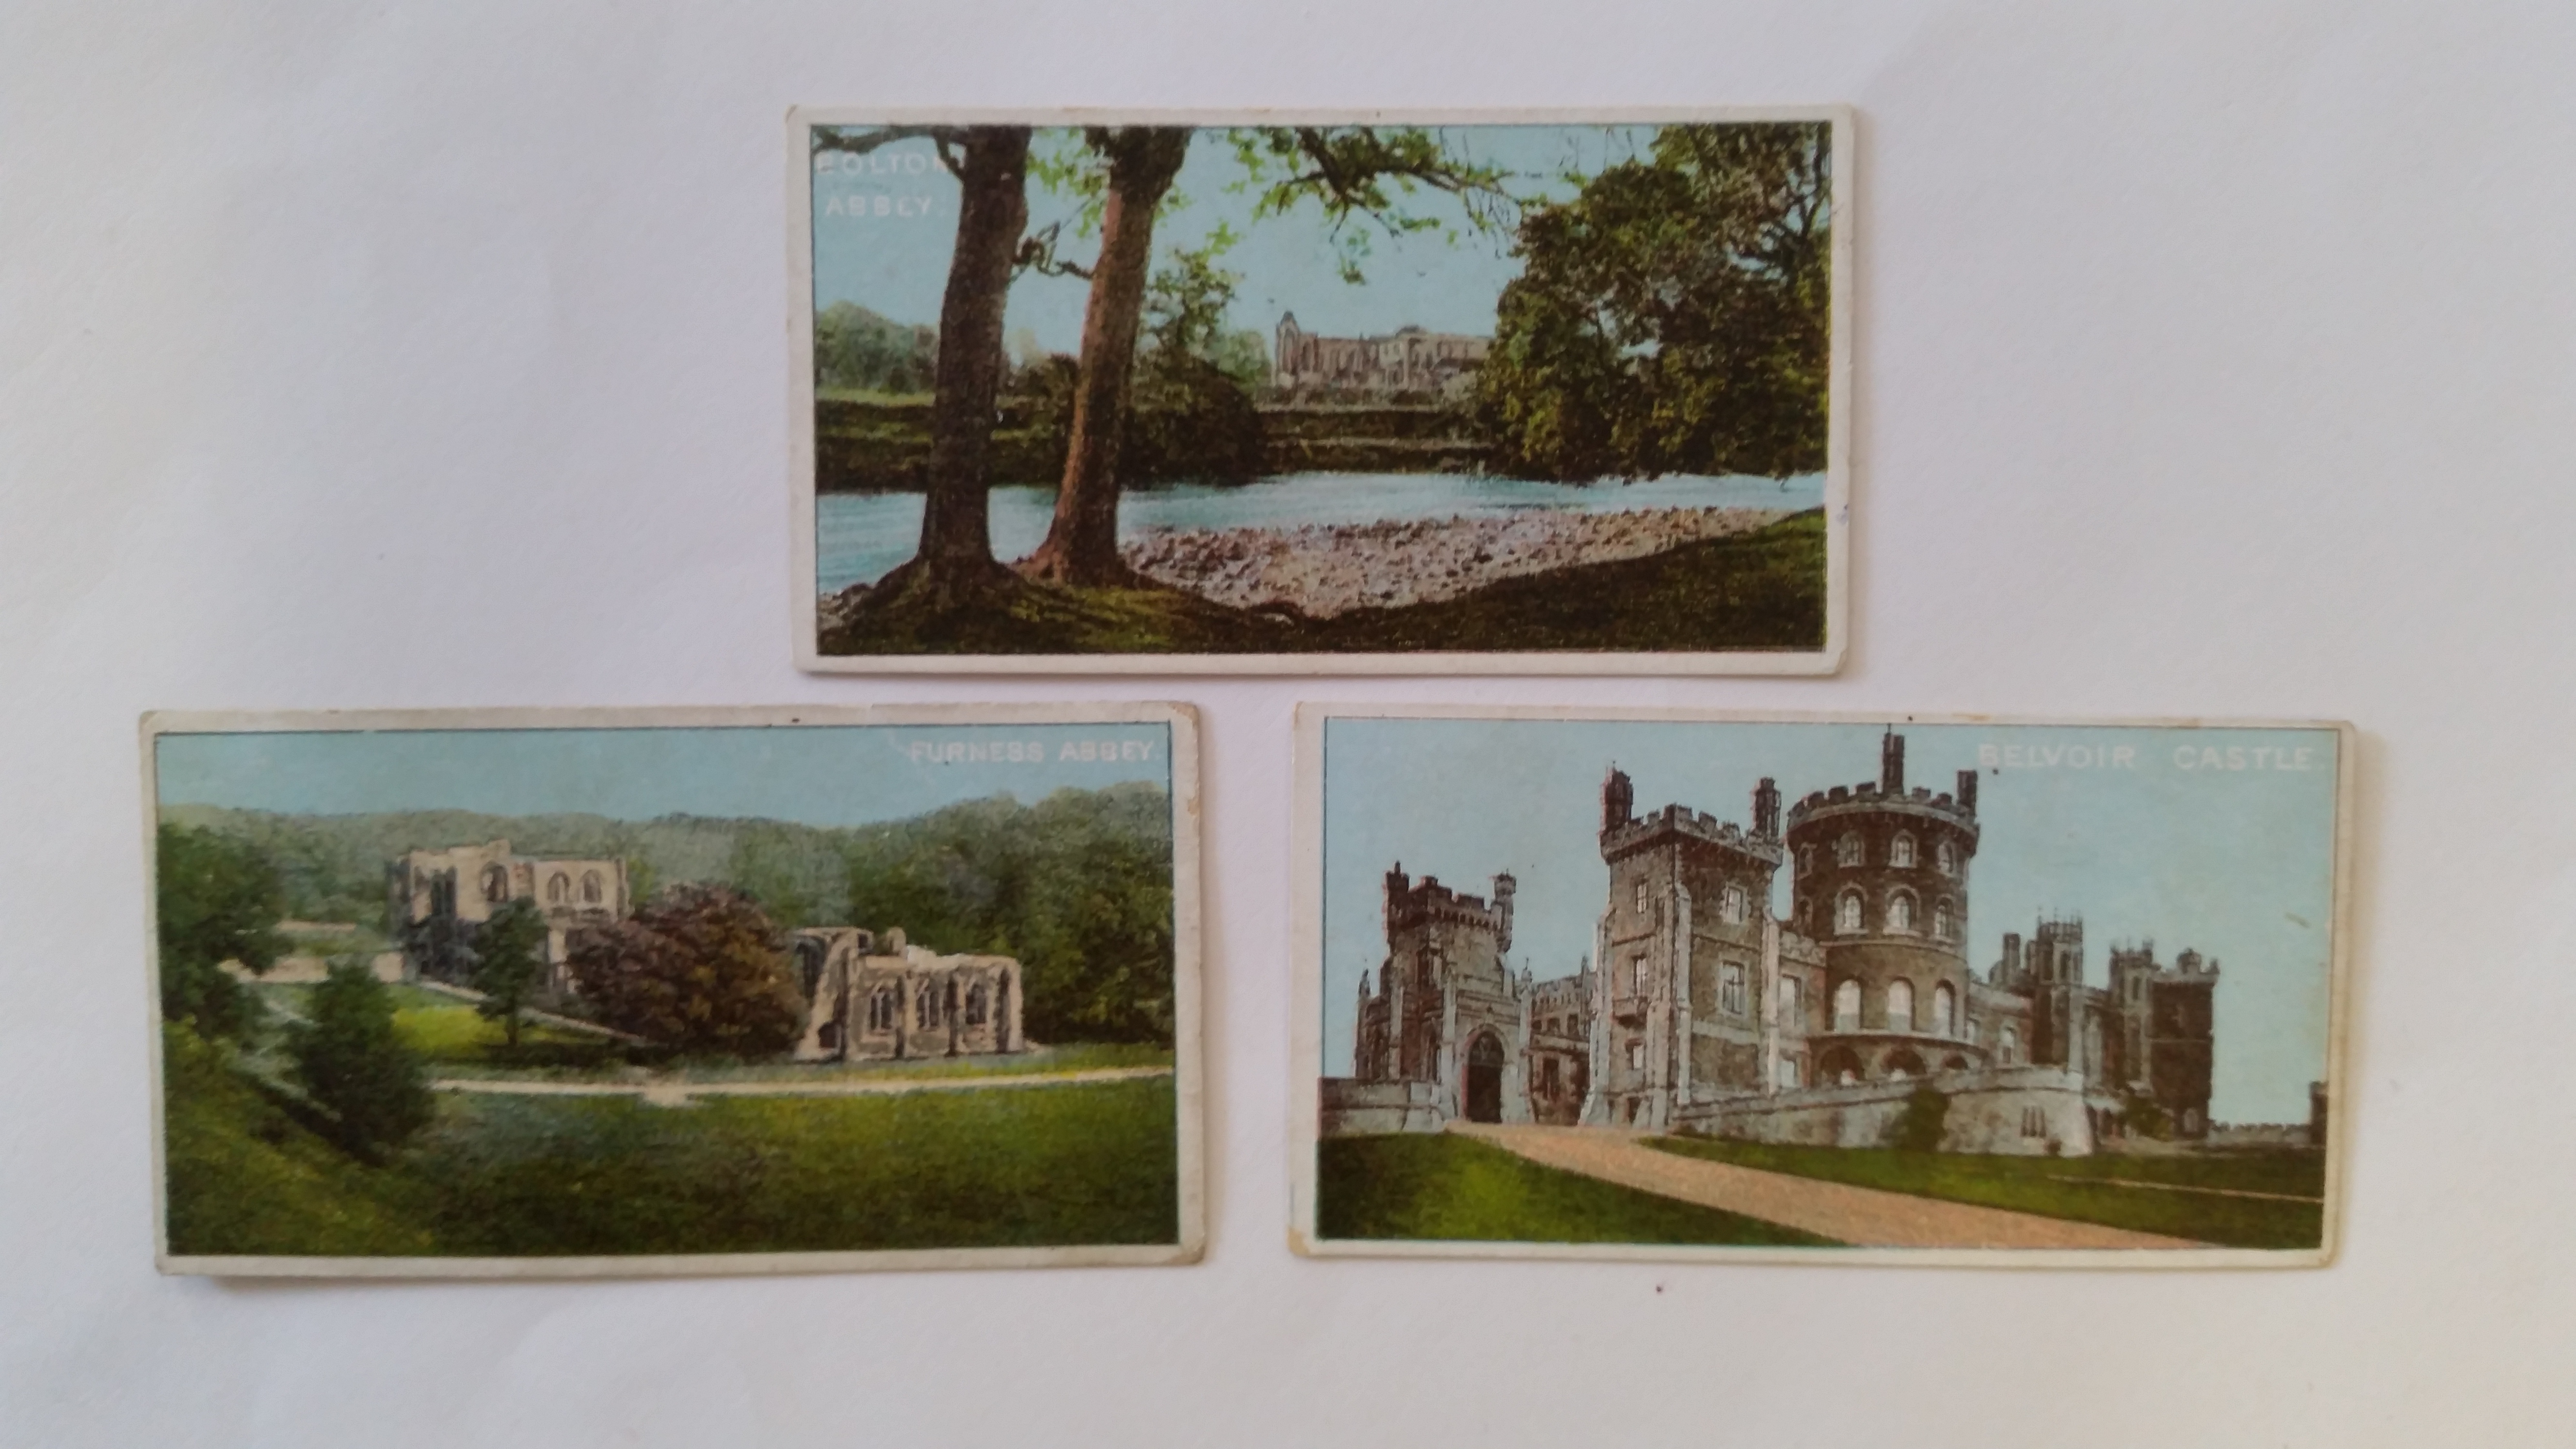 PLAYERS, Castles & Abbeys, Furness Abbey, Belvoir Castle & Bolton Abbey, white borders, VG, 3